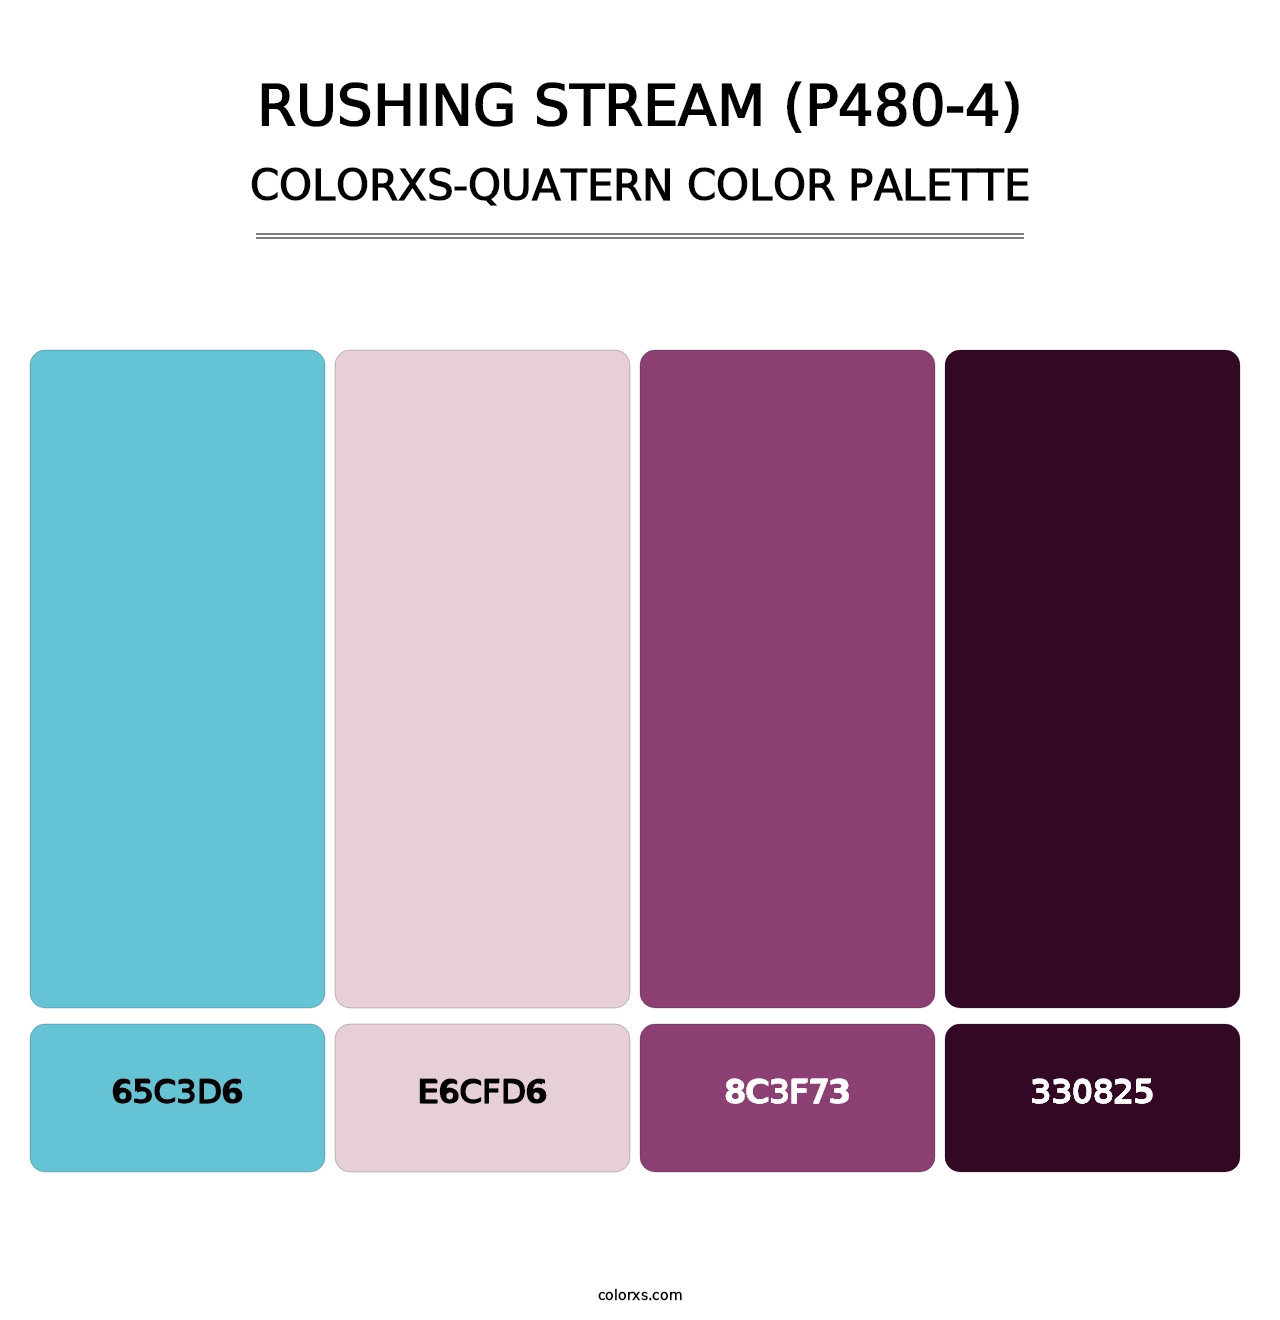 Rushing Stream (P480-4) - Colorxs Quatern Palette